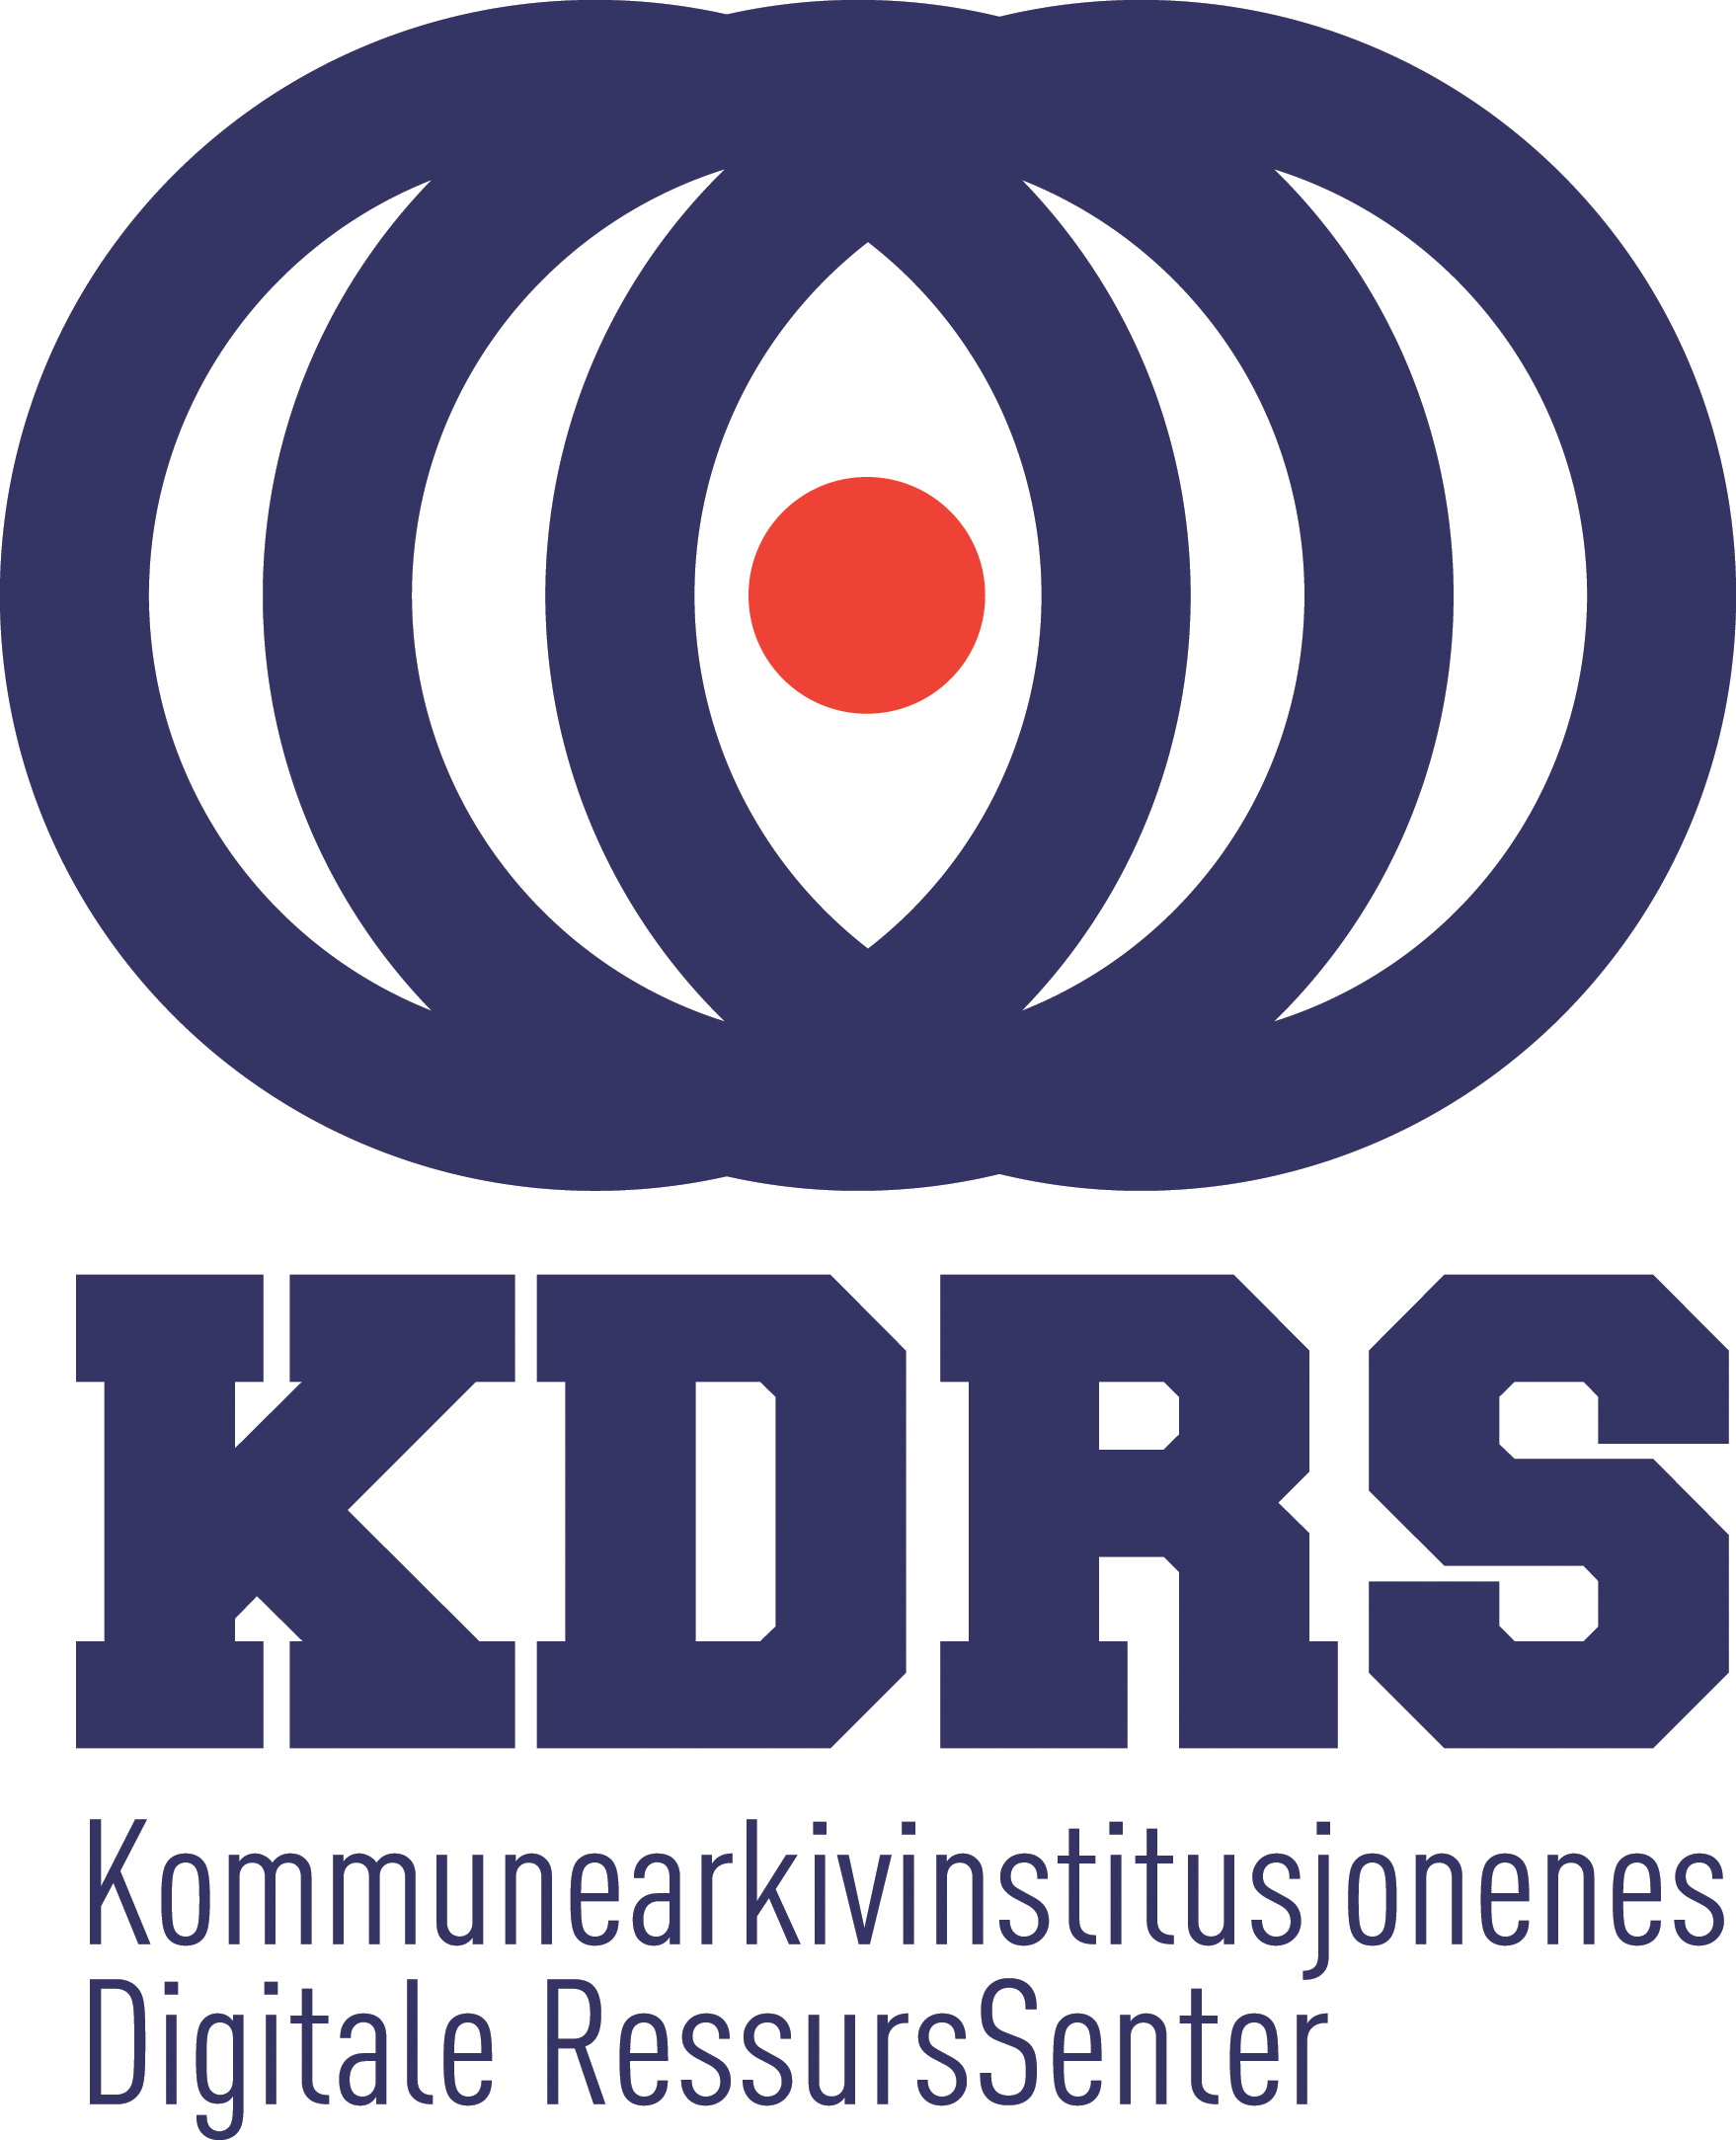 Kommunearkivinstitusjonenes Digitale Ressurssenter SA (KDRS)